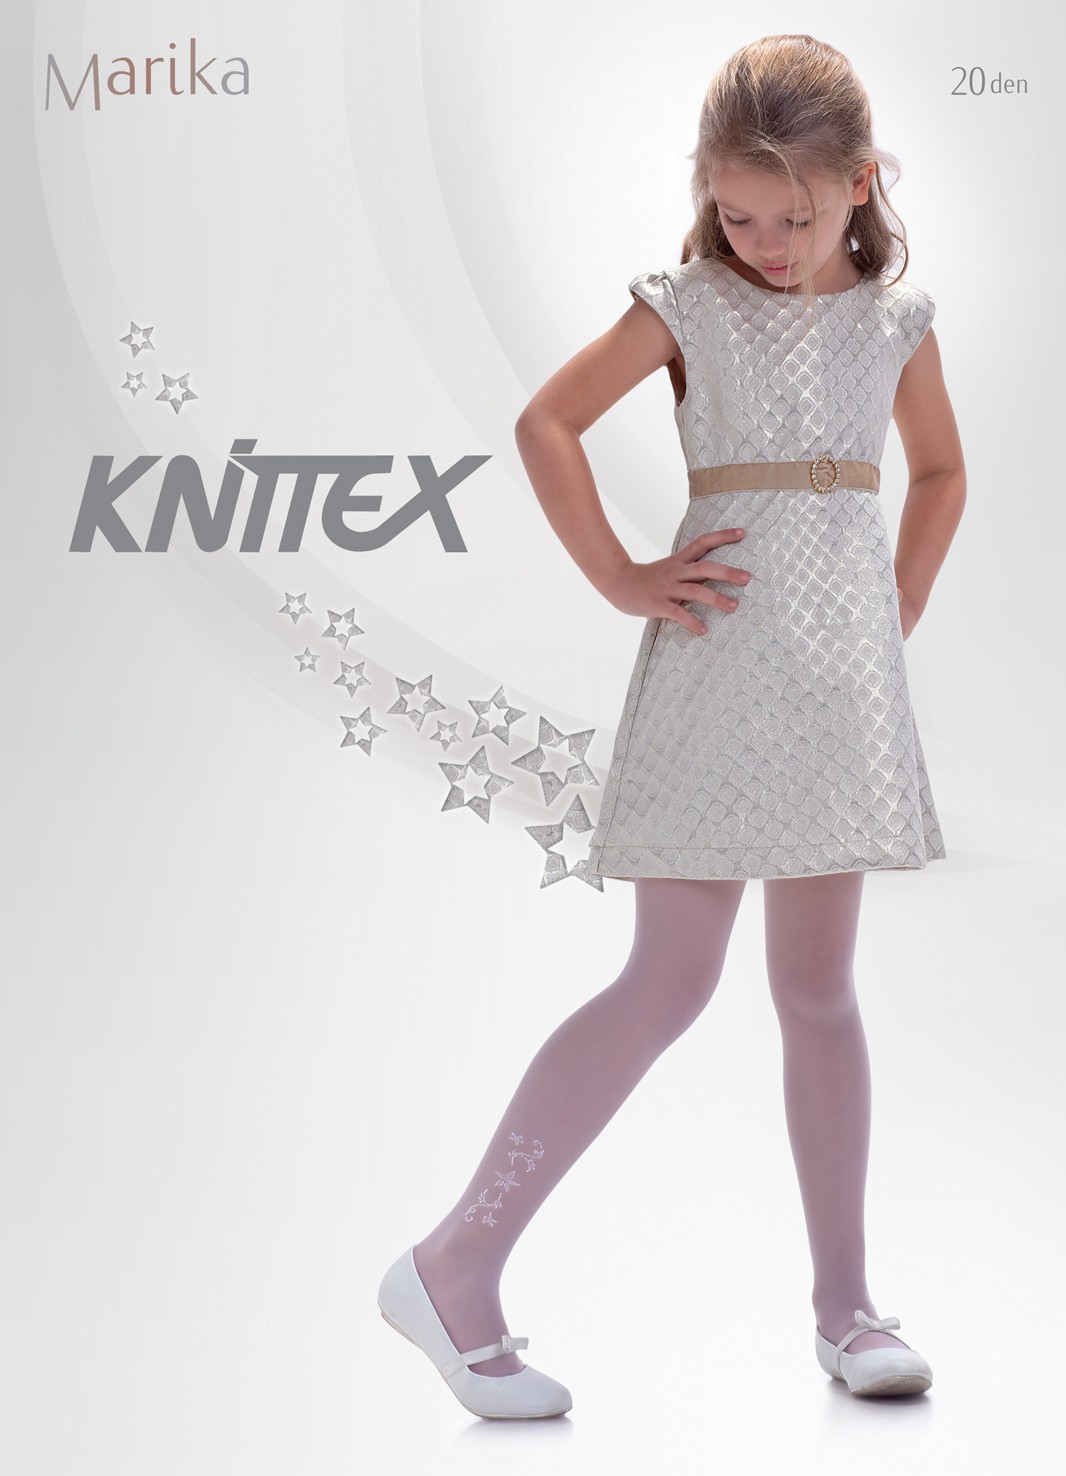 Kids White Patterned Tights Rabbit by Knittex Girls 40 Denier 